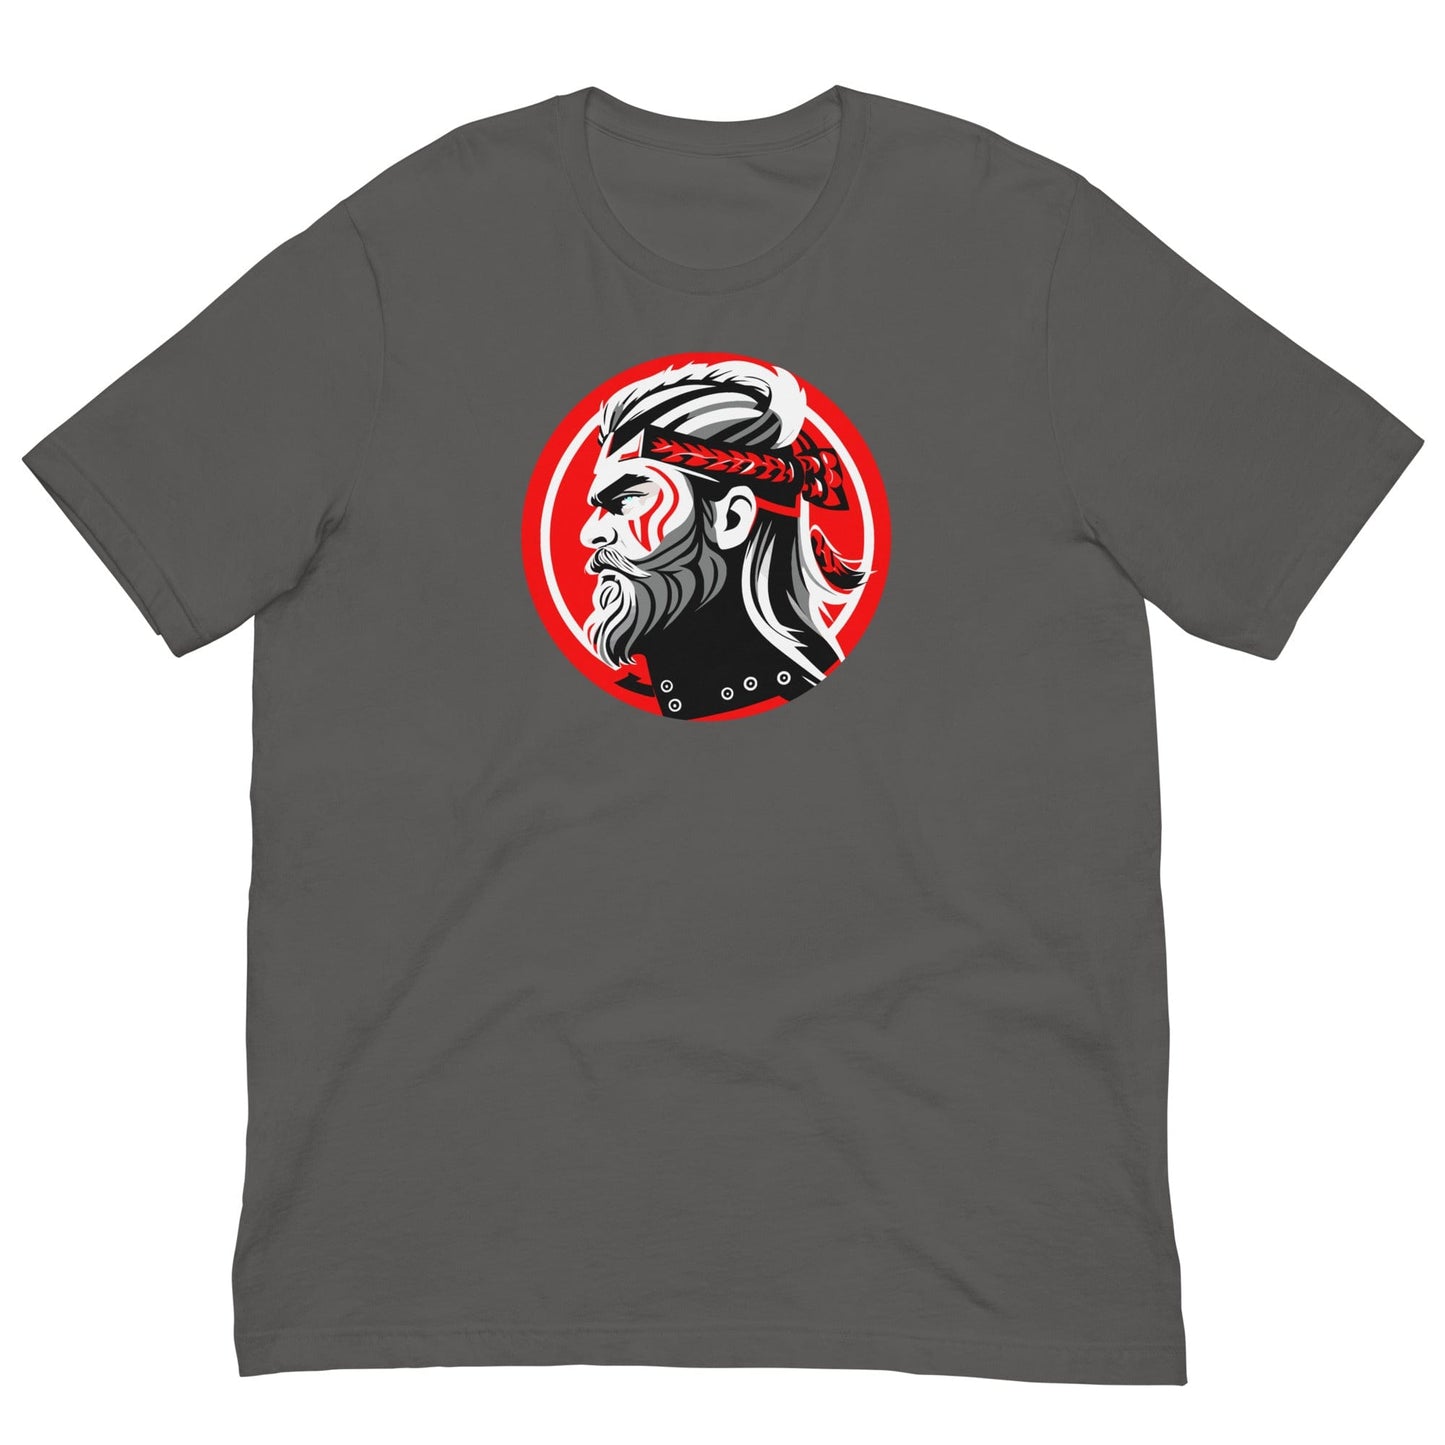 Samurai Warrior T-shirt Asphalt / S